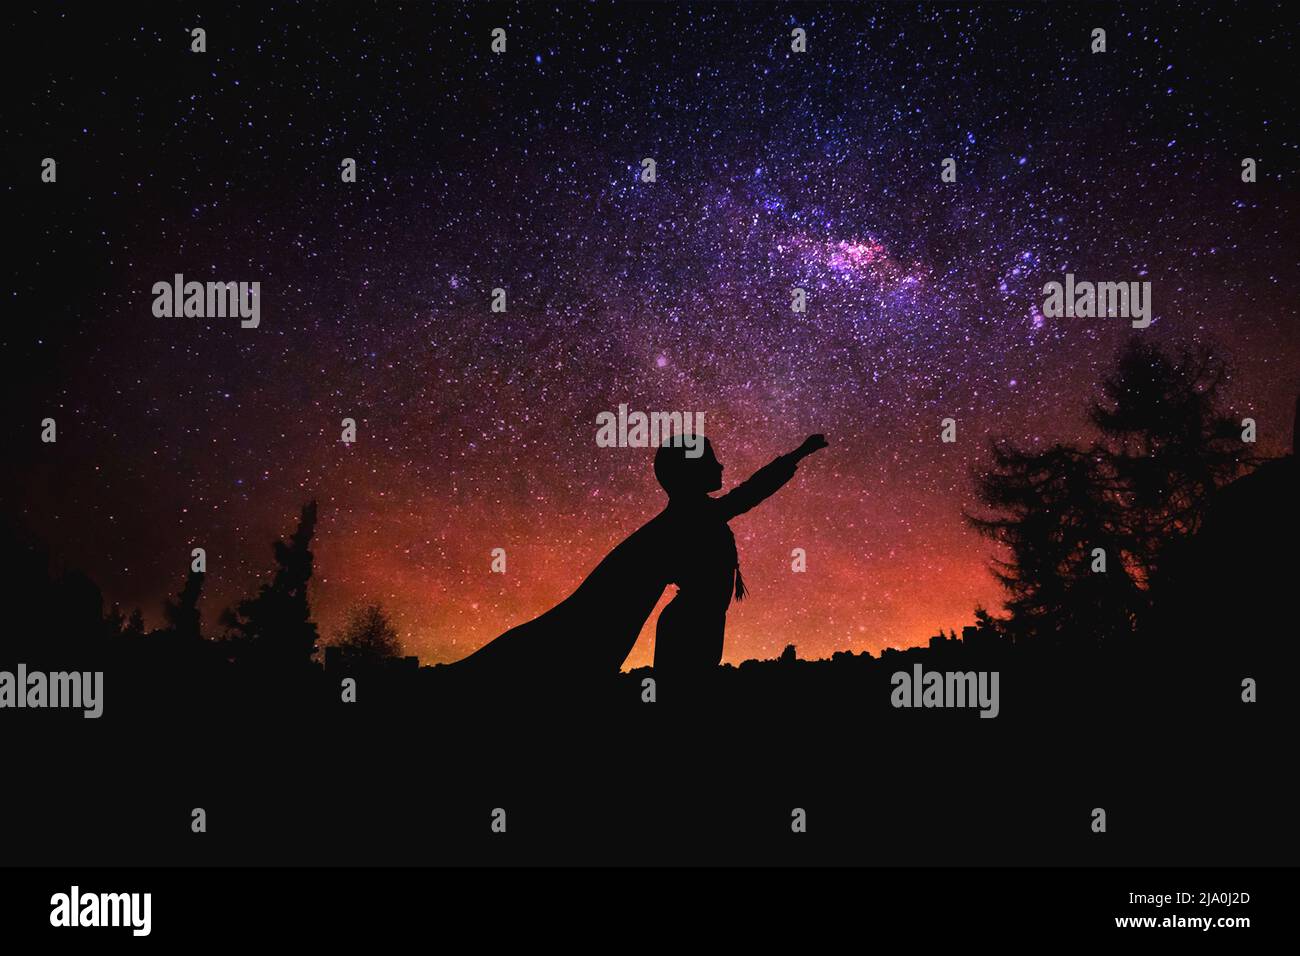 superhero at the night starry sky background. Mixed media Stock Photo